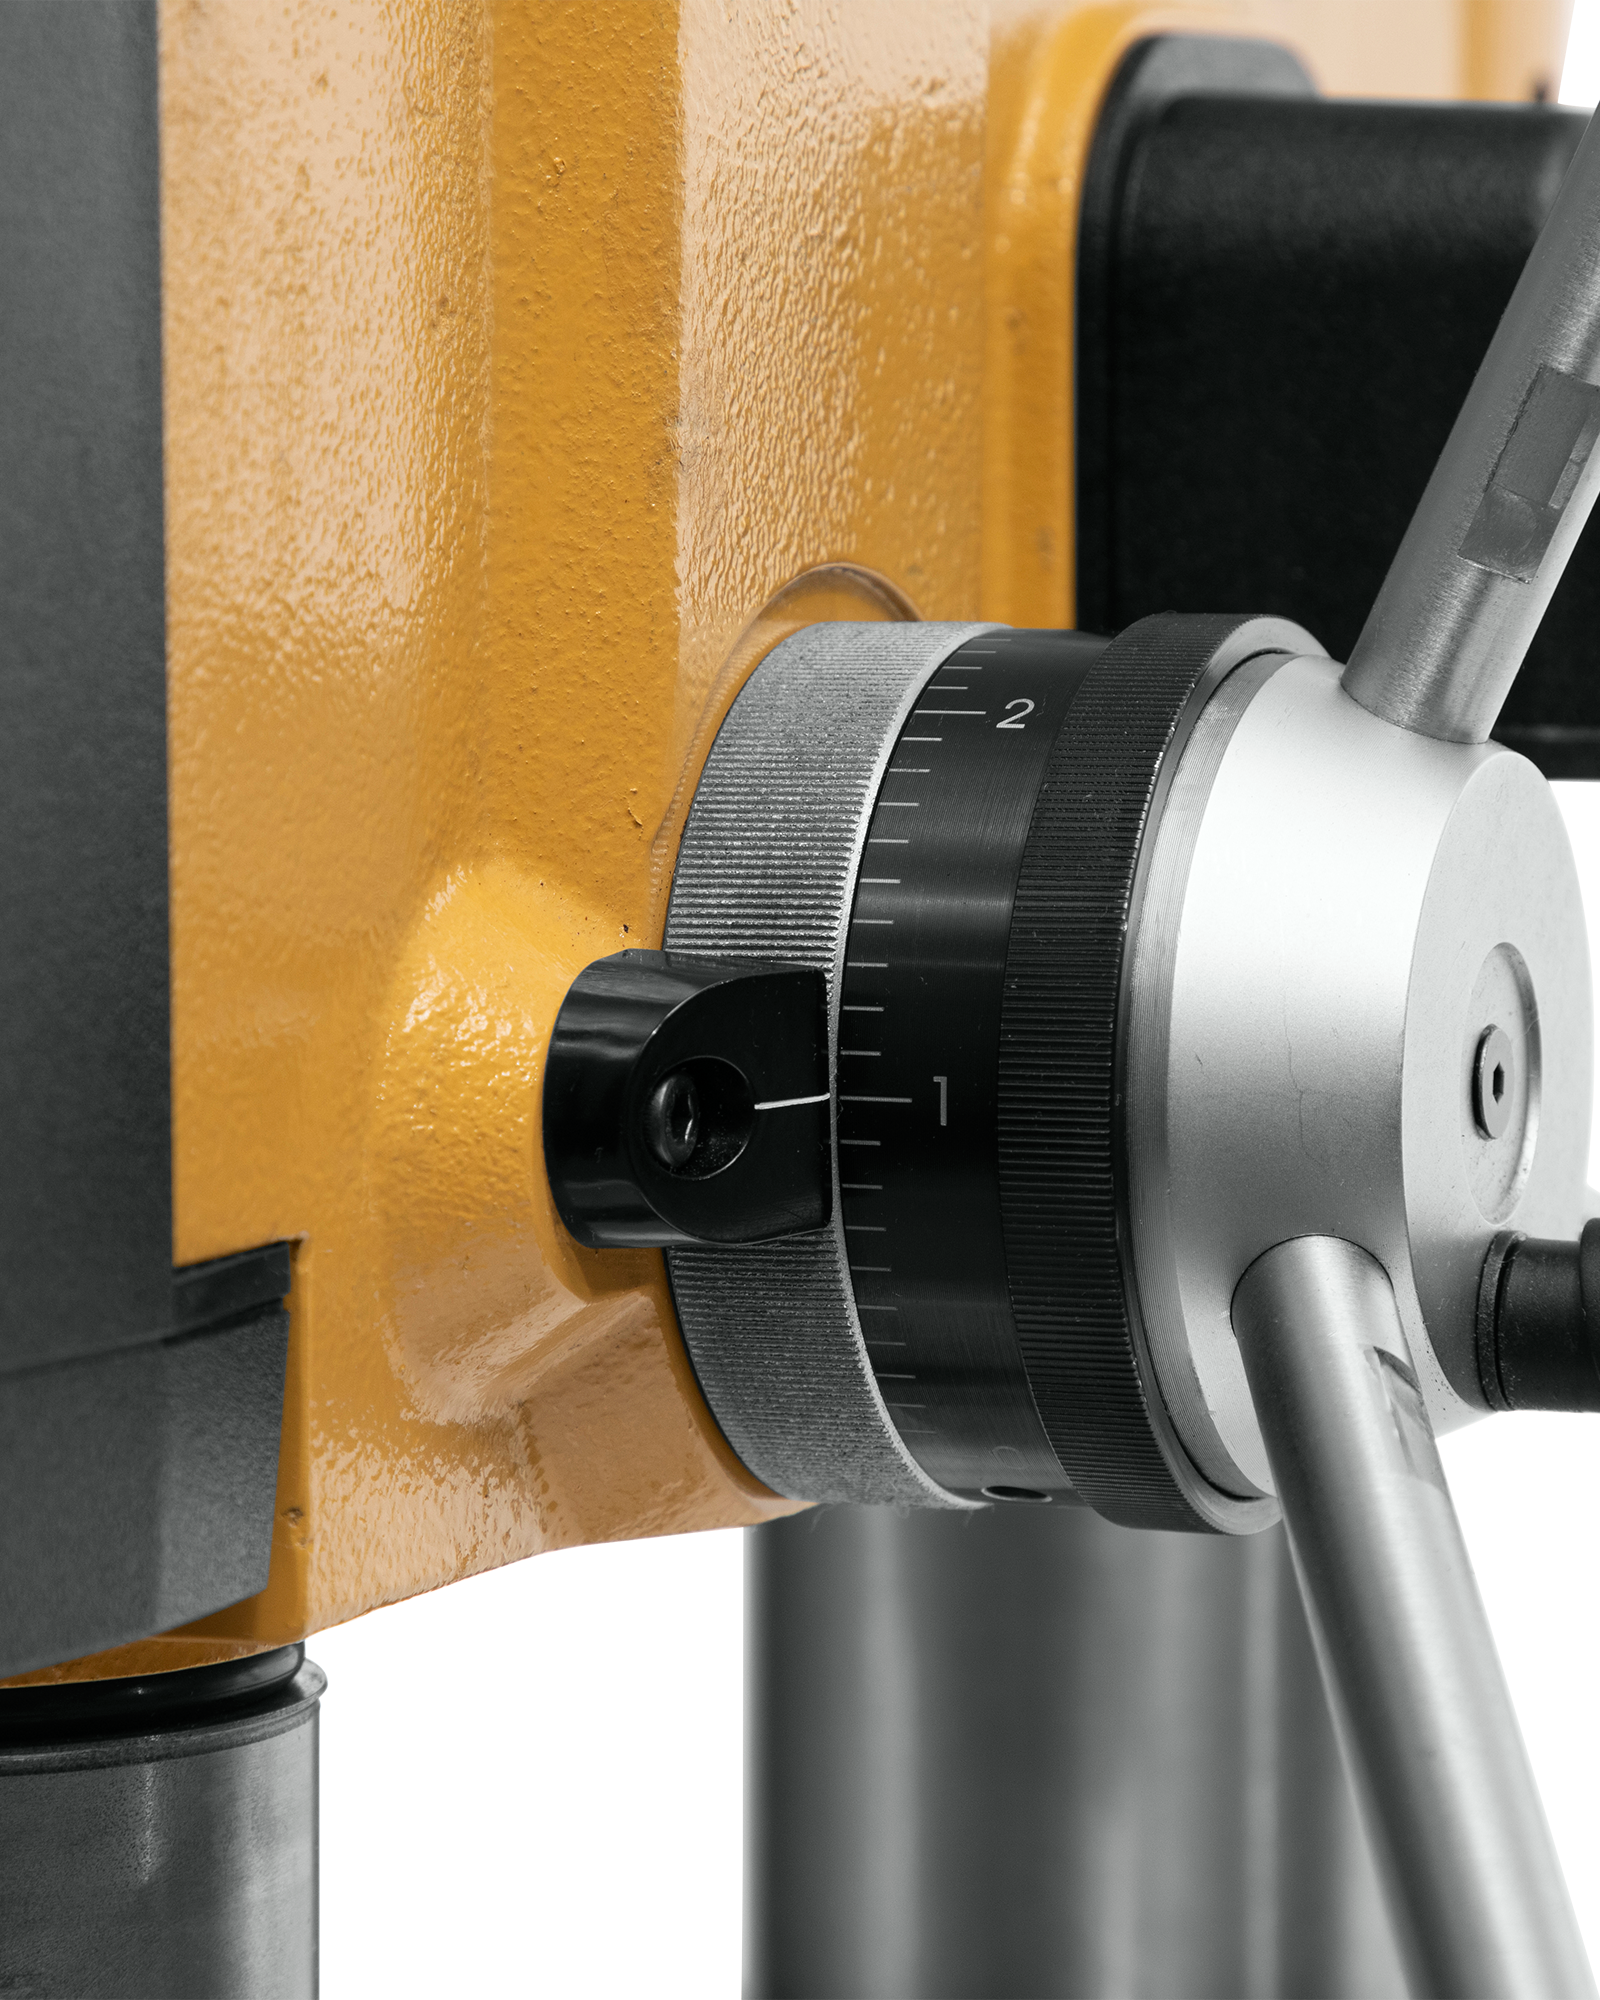 Powermatic PM2820EVS Drill Press | Drill Press | Hamilton Lee Supply